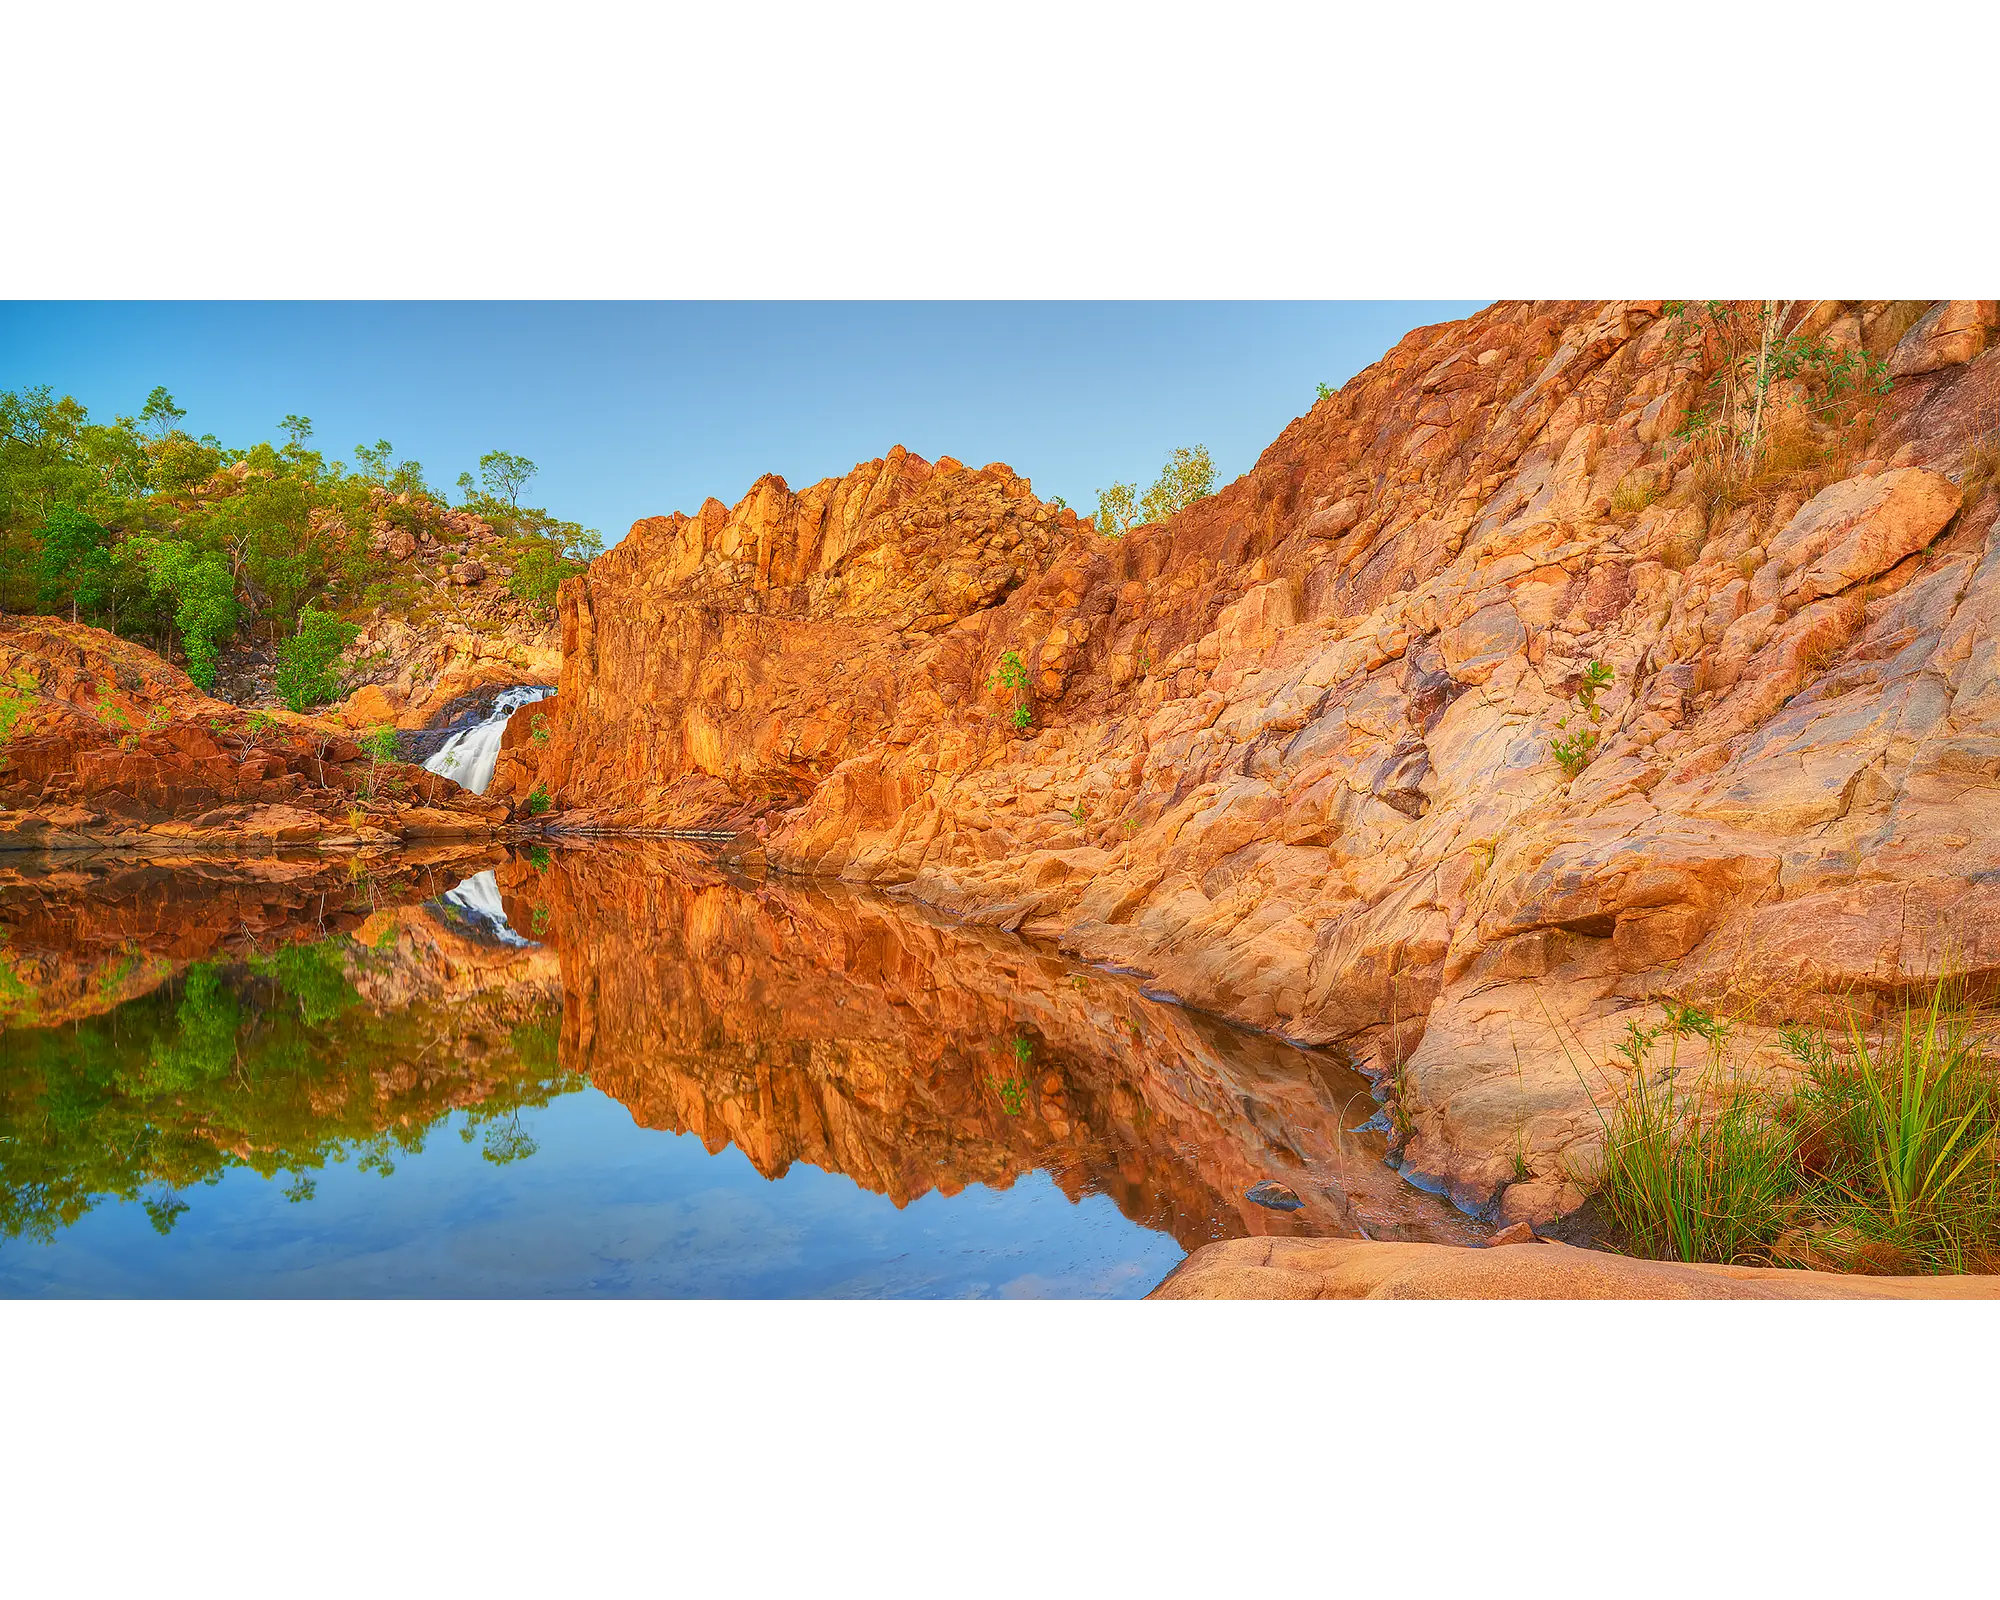 Plunge Pool. Edith Falls, Nitmiluk National Park, Northern Territory, Australia.